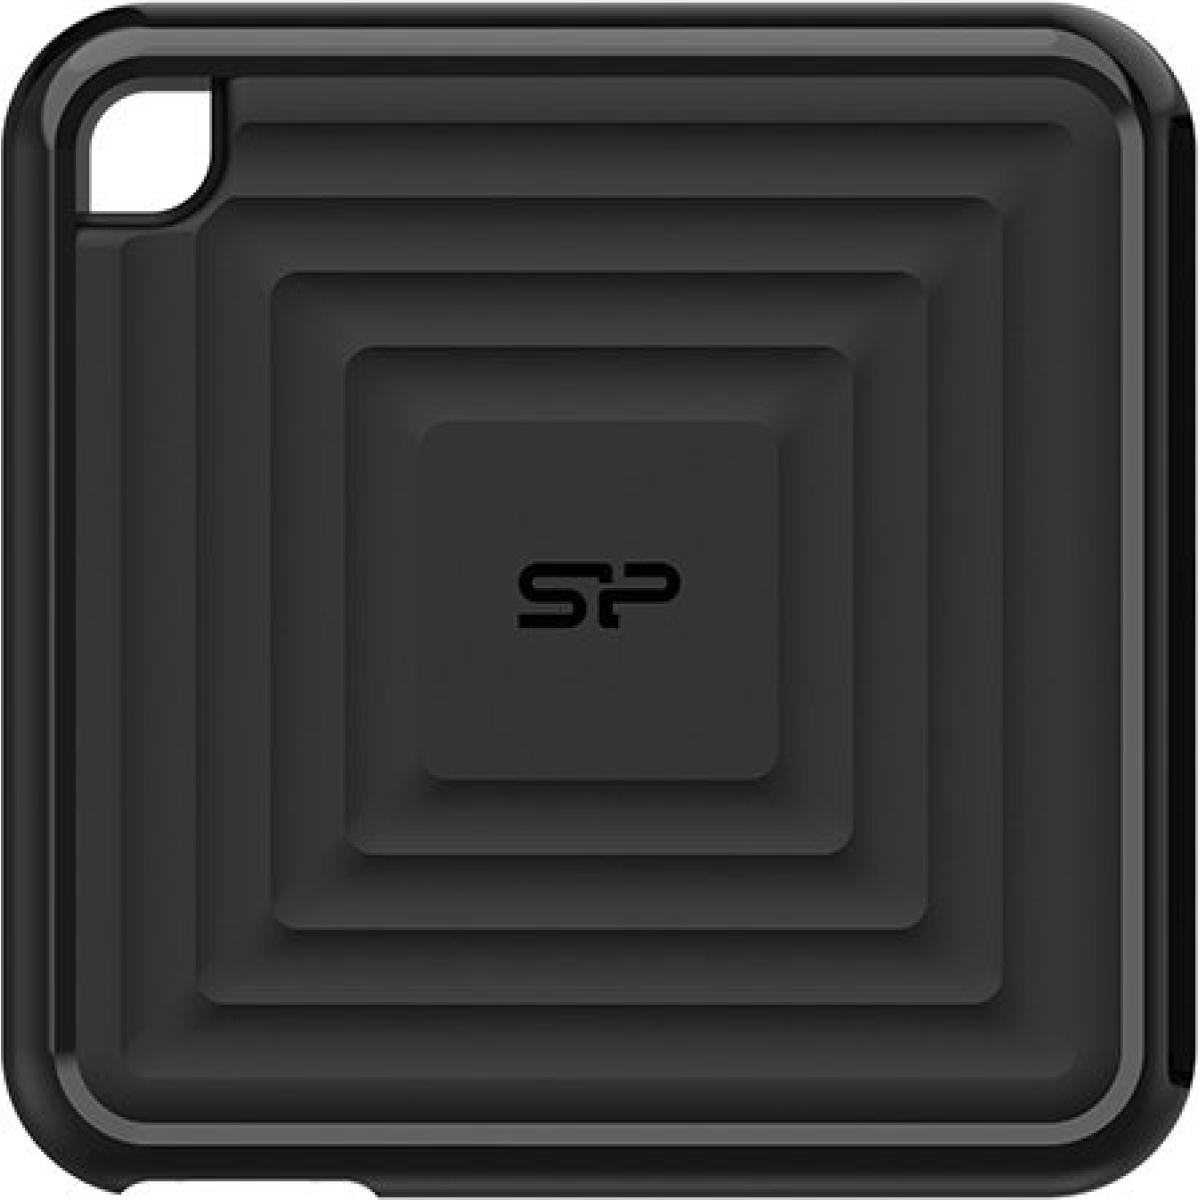 Silicon Power 2TB PC60 External SSD